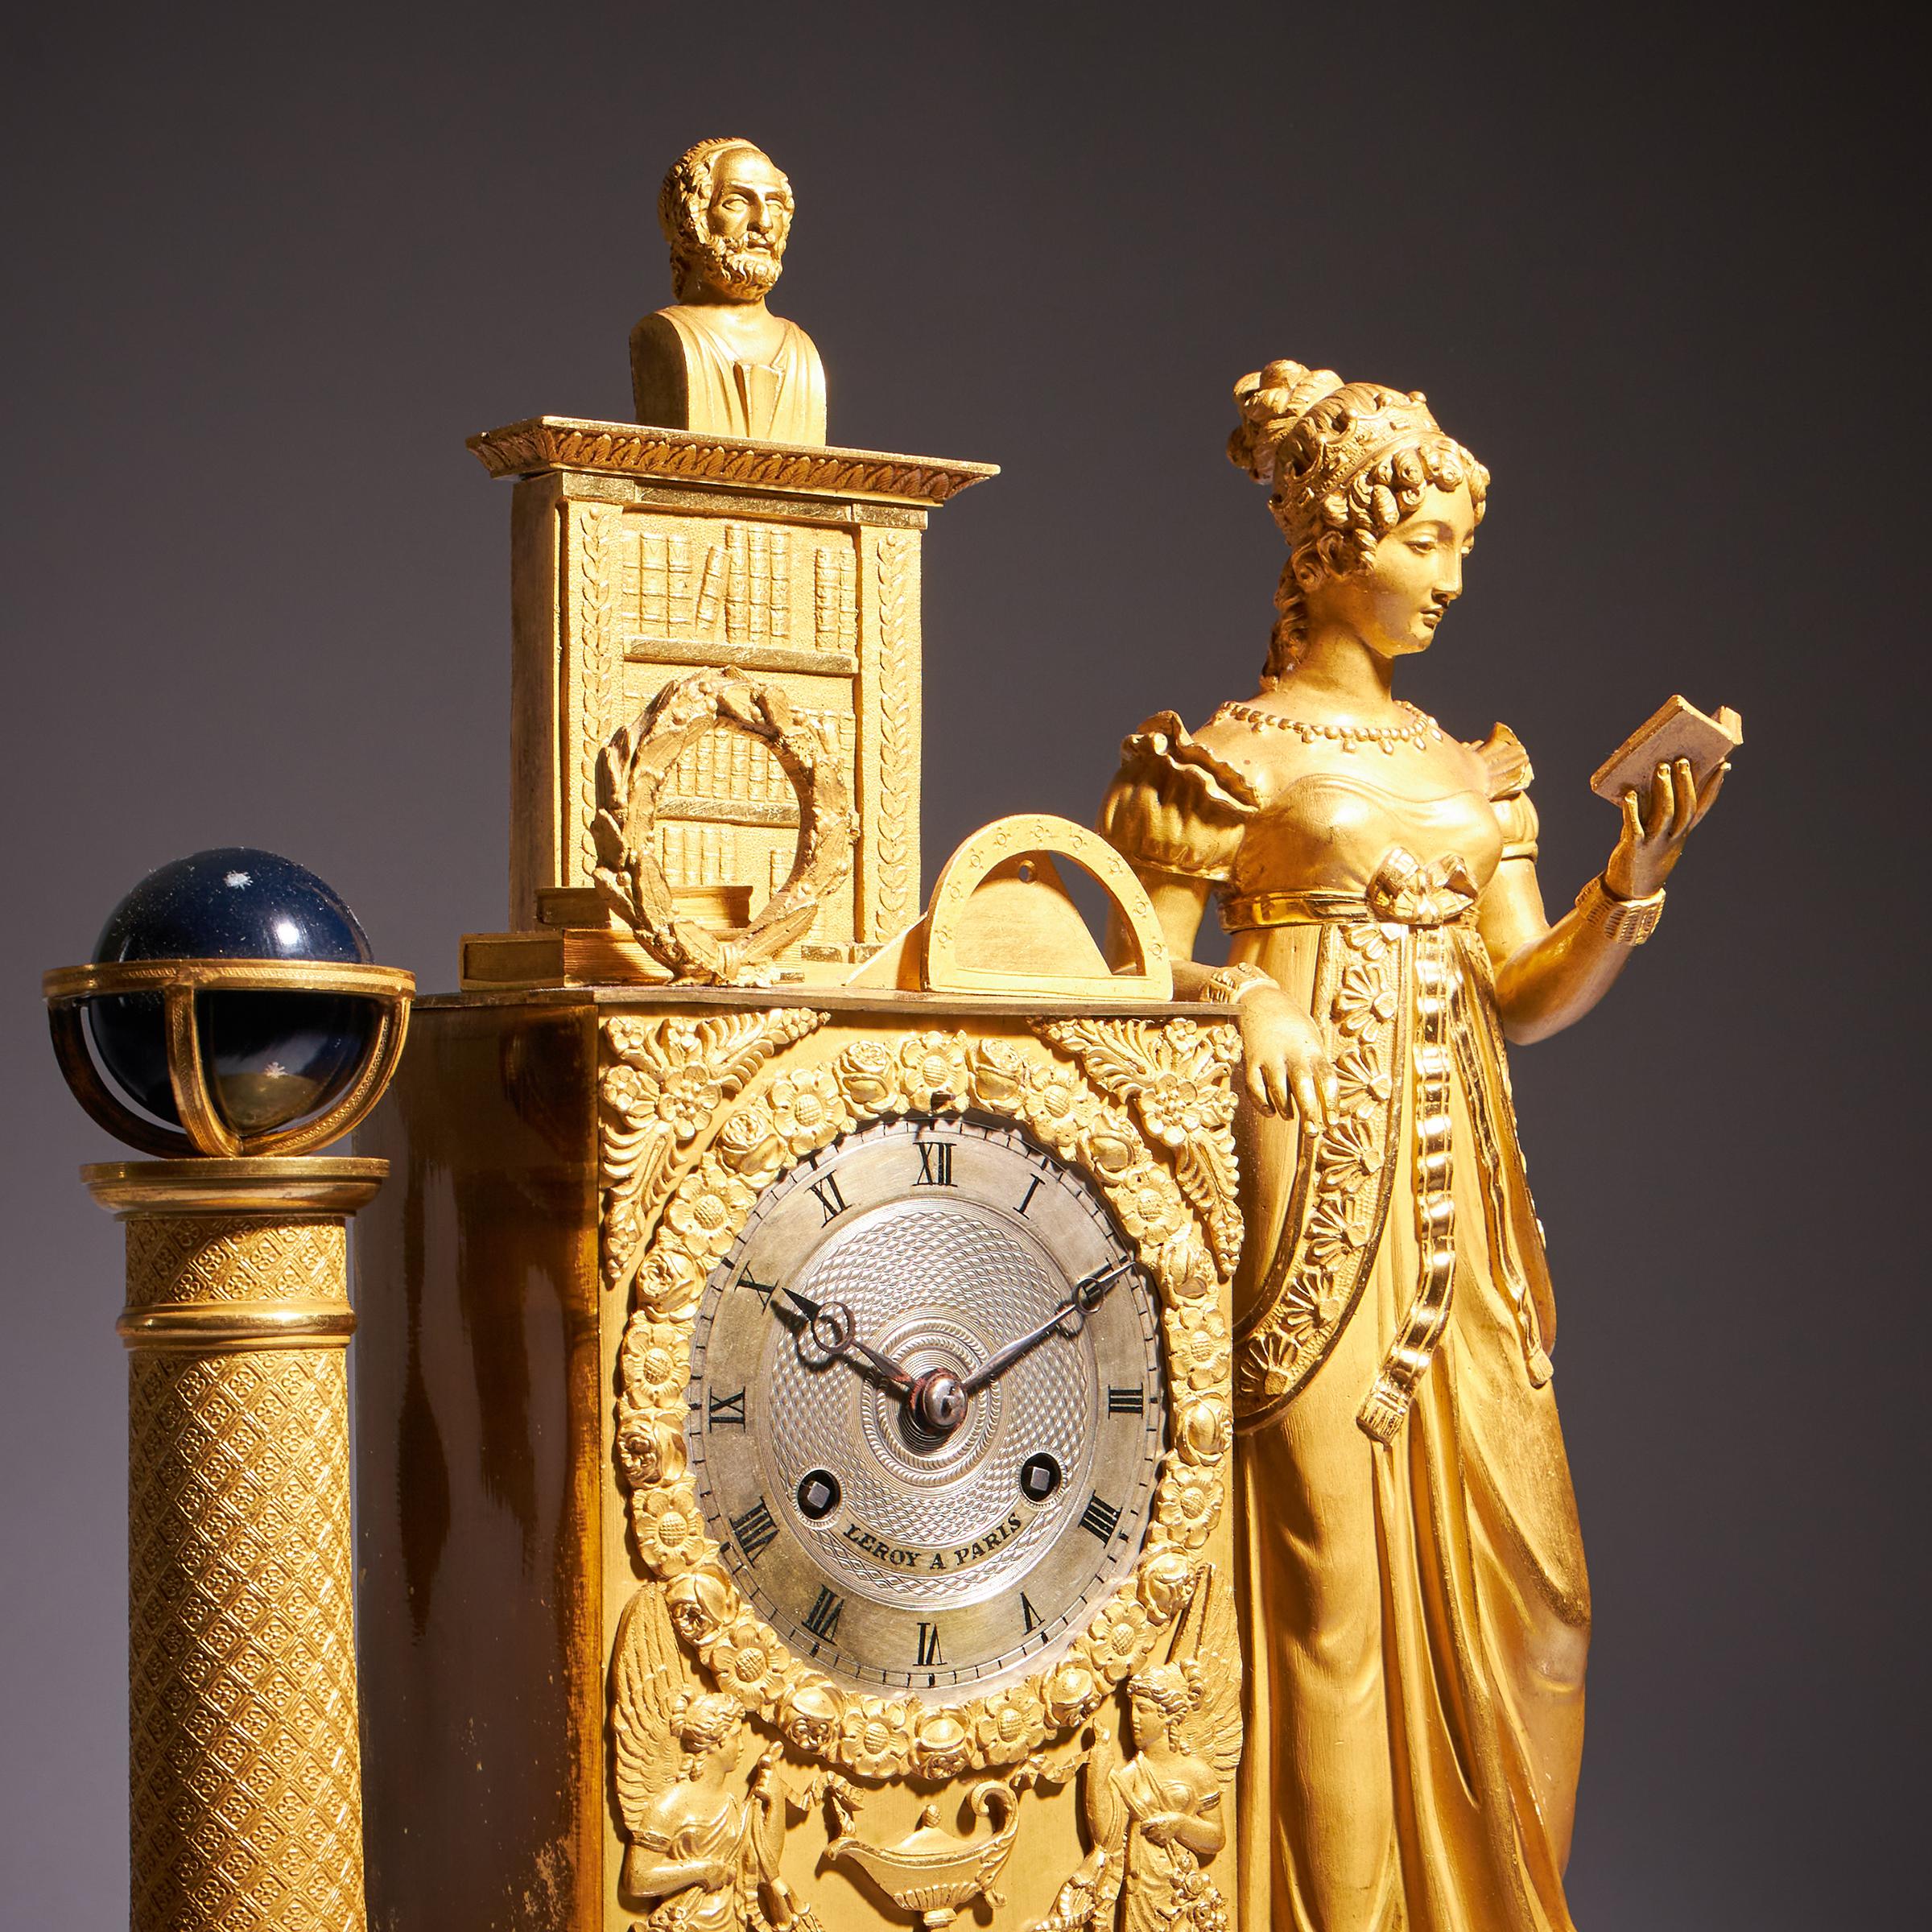 Fine 19th century French ormolu mantel clock (pendule) by Leroy a Paris, c. 1825 For Sale 3